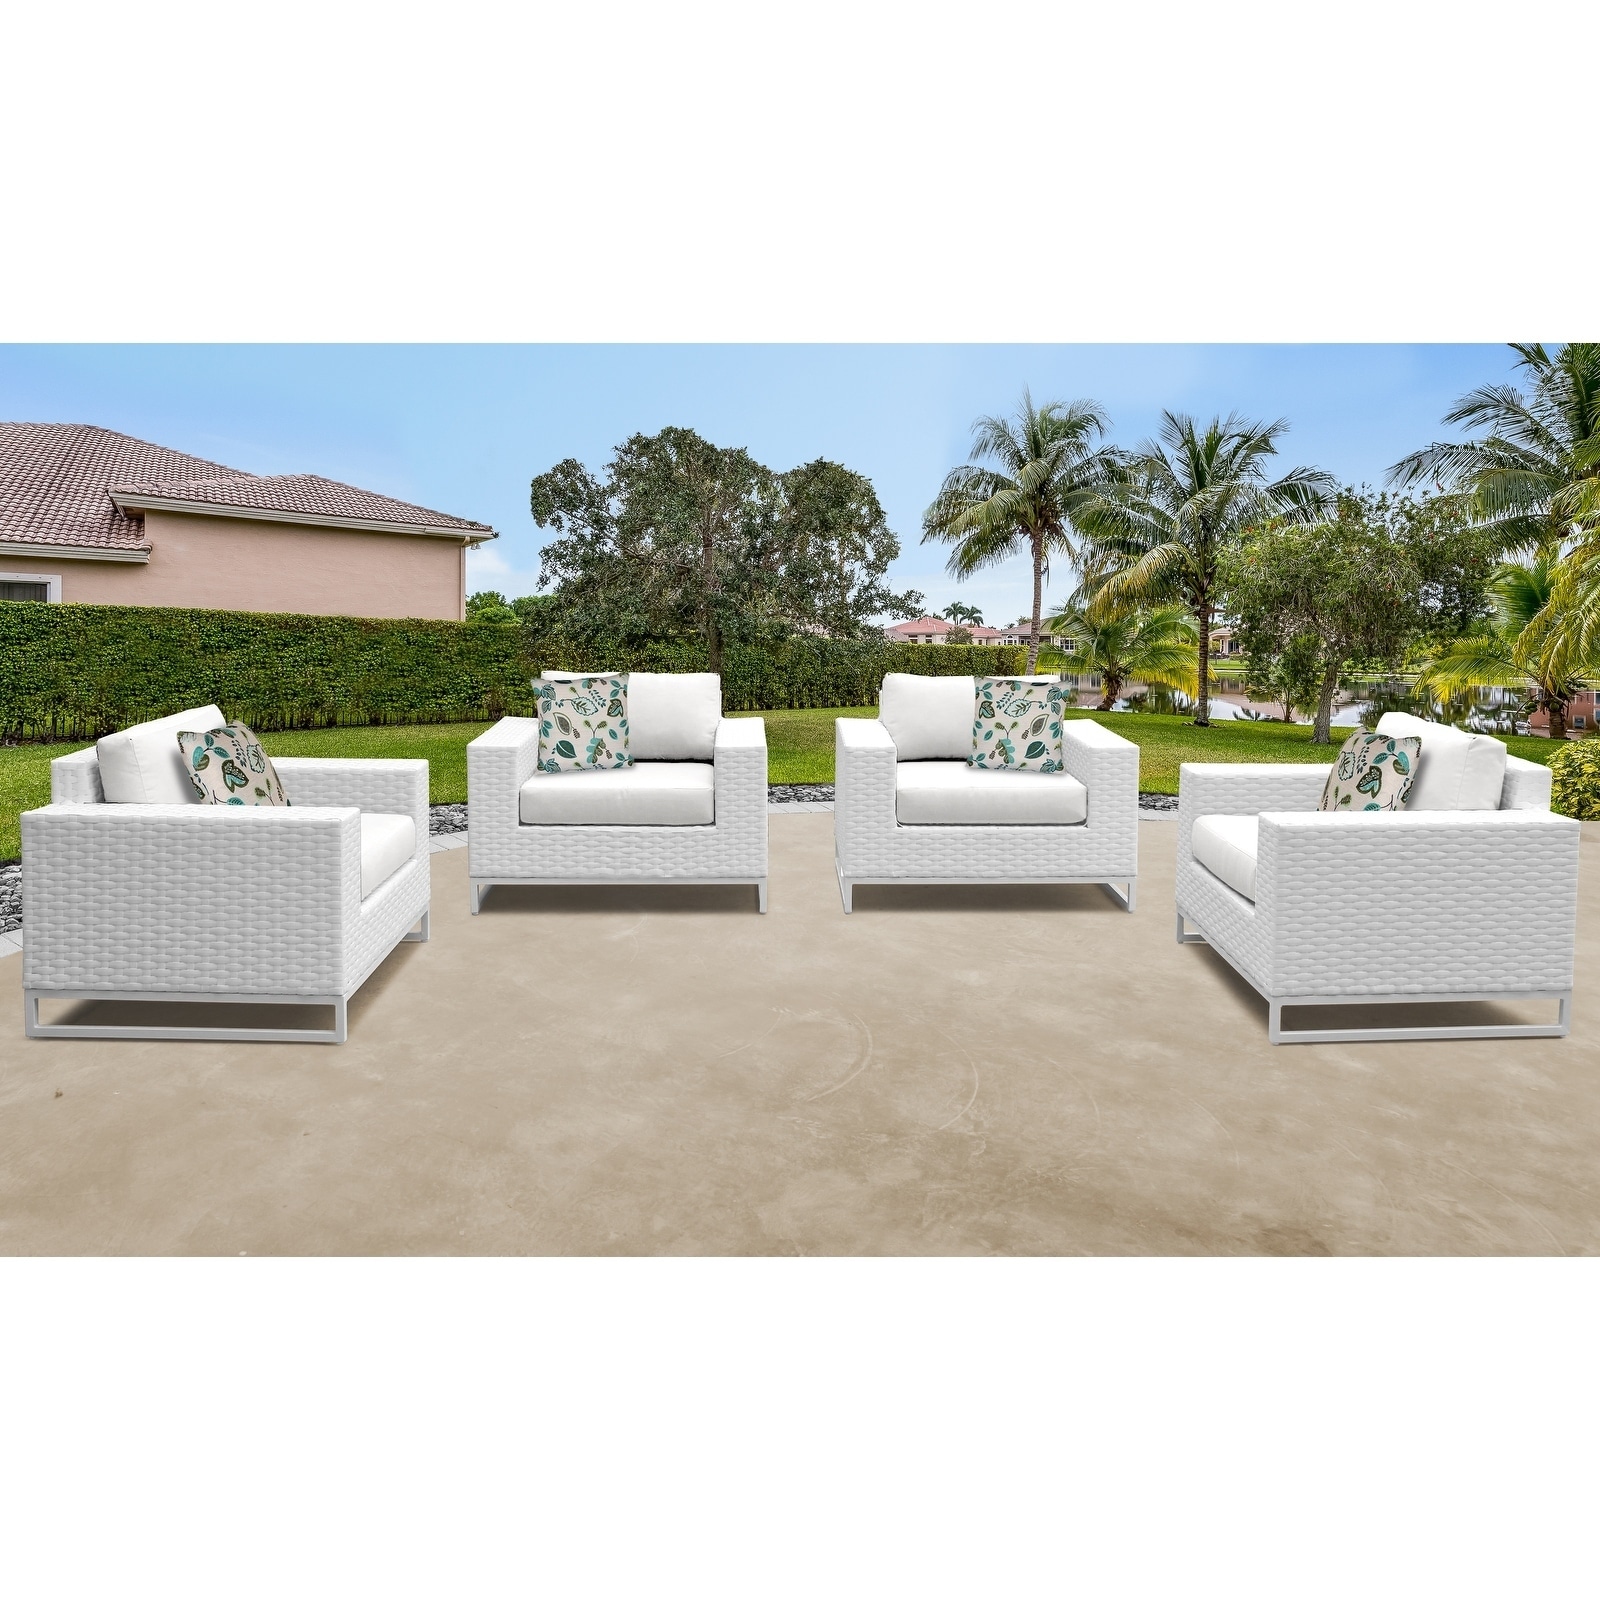 Miami 4 Piece Outdoor Wicker Patio Furniture Set 04a